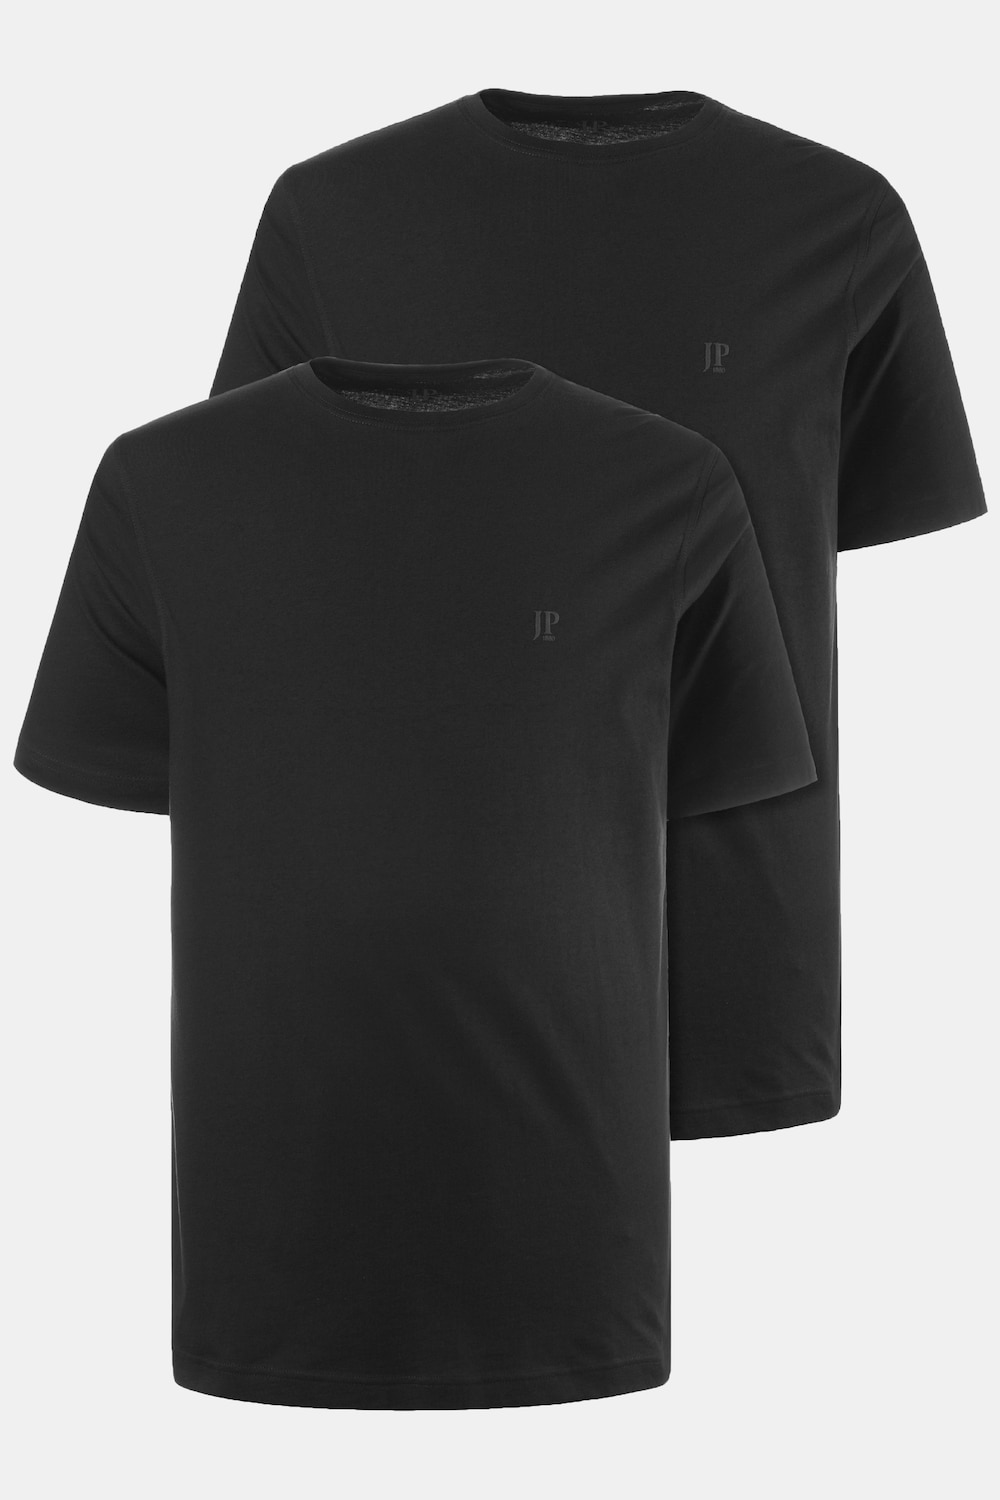 Grote Maten T-shirts, Heren, zwart, Maat: 4XL, Katoen, JP1880